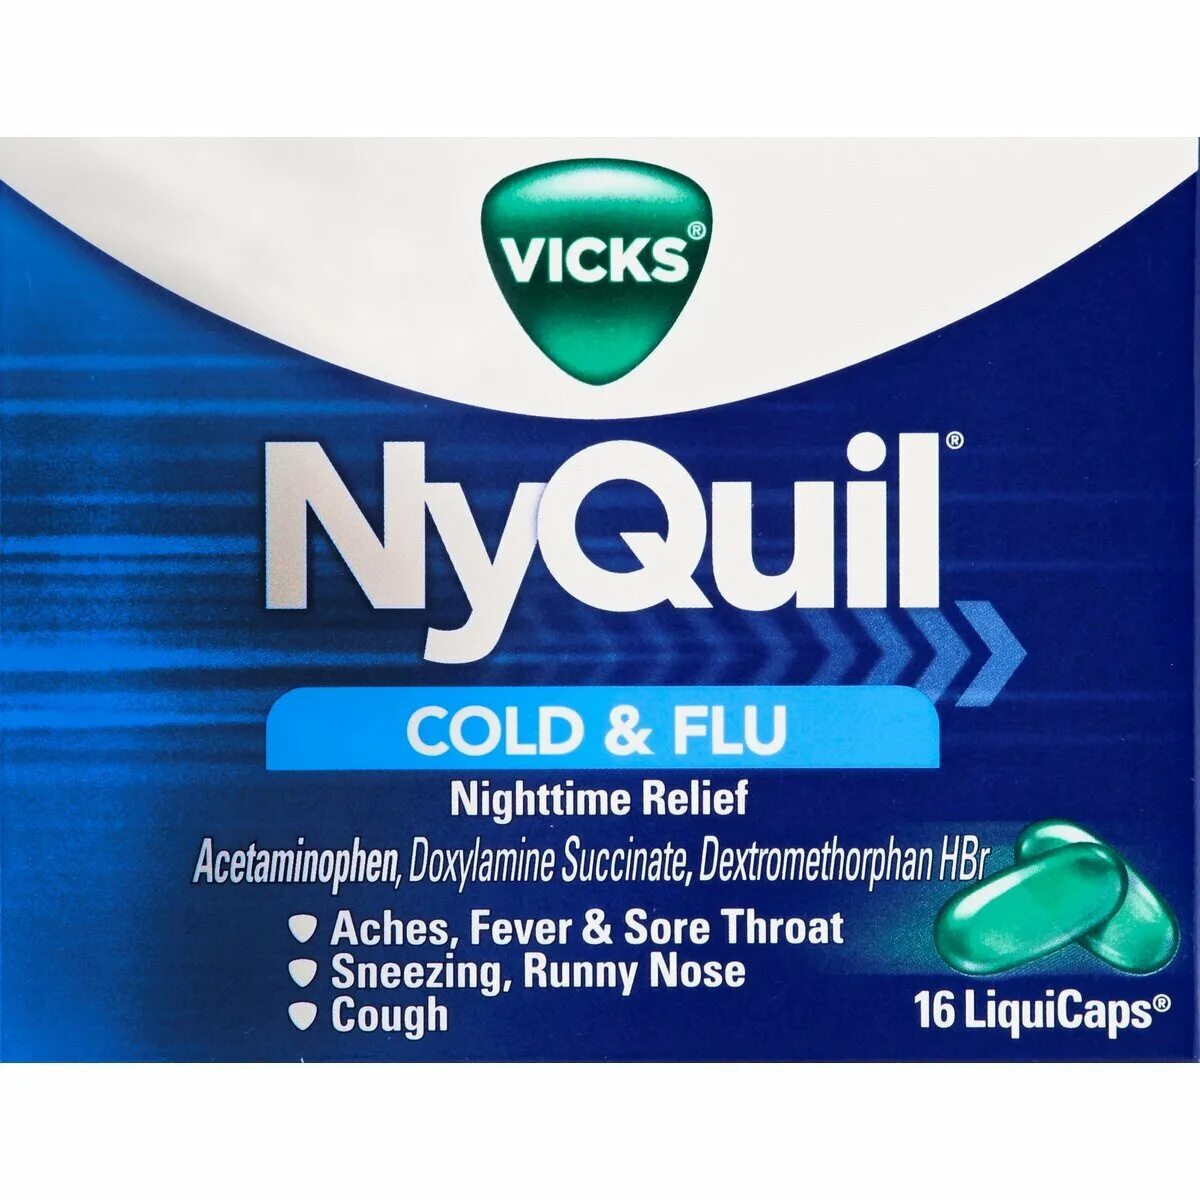 Vicks таблетки от простуды. Лекарство Cold Flu Relief. Vicks Night time. Nyquil.